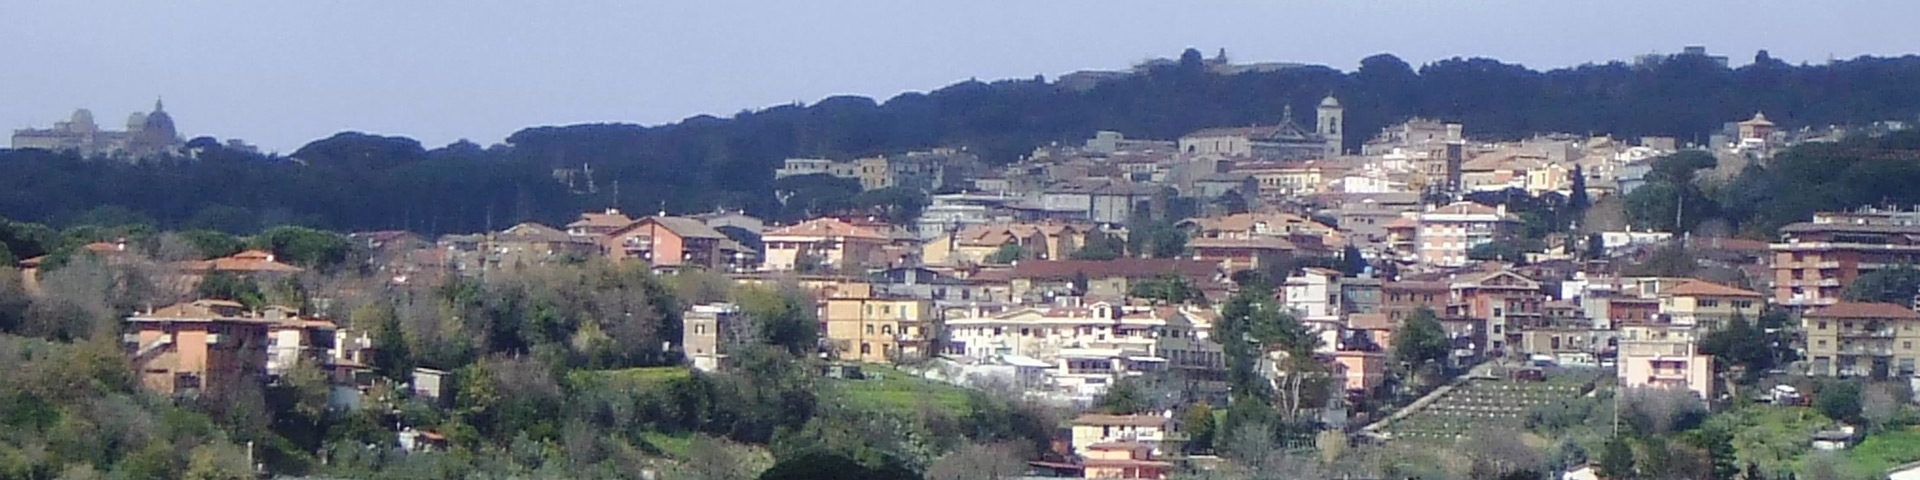 Panorama Albano Laziale